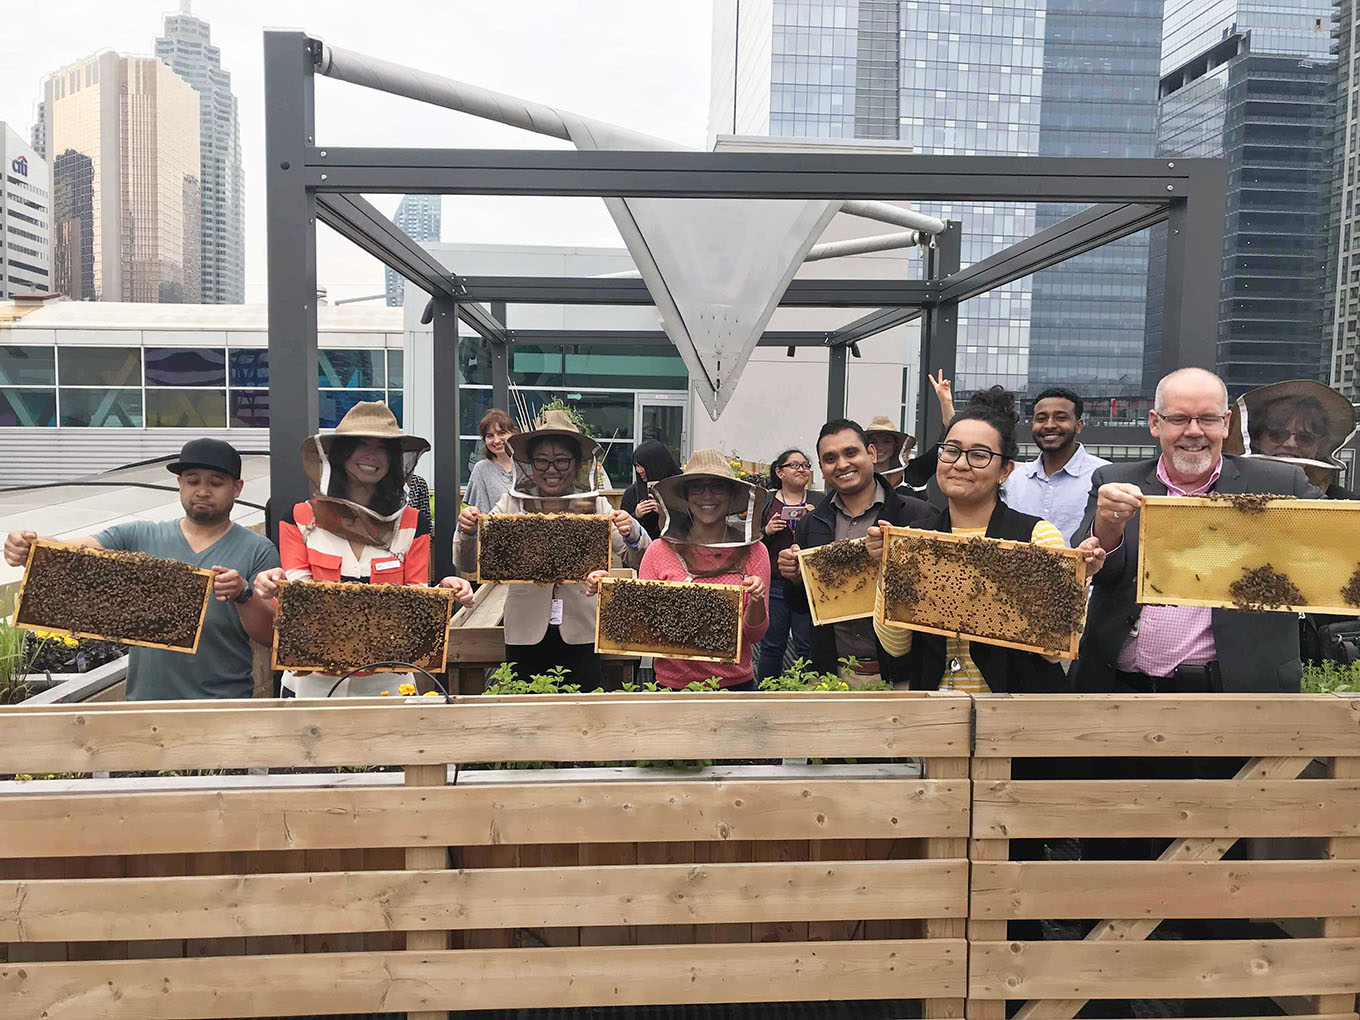 Metro Toronto Convention Centre's tenants holding frames of honey beesAlvéole's hives.